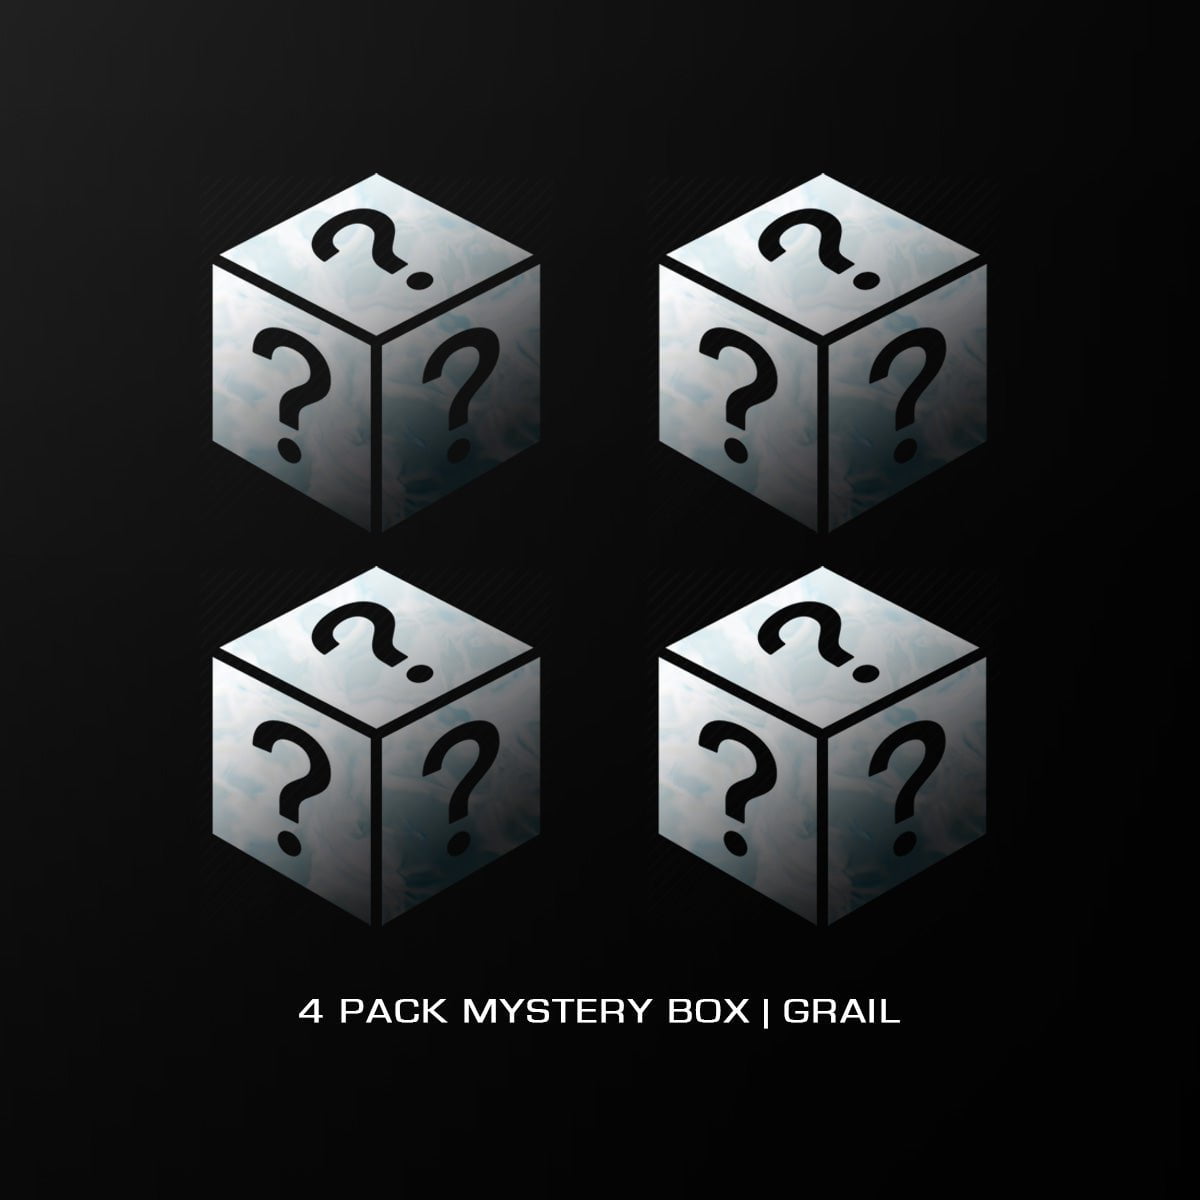 4-PACK MYSTERY BOX | GRAIL